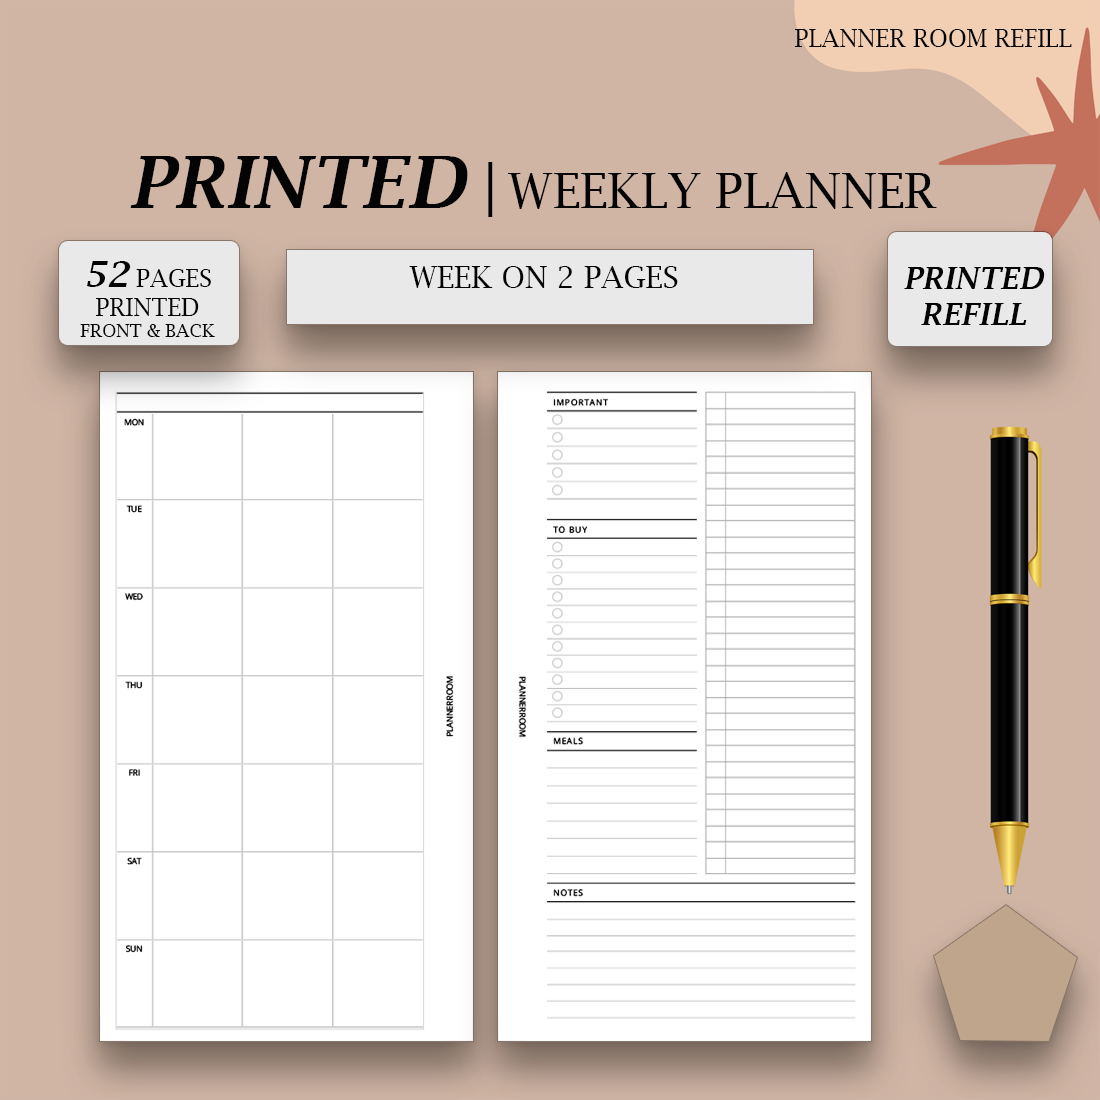 PRINTED weekly planner inserts